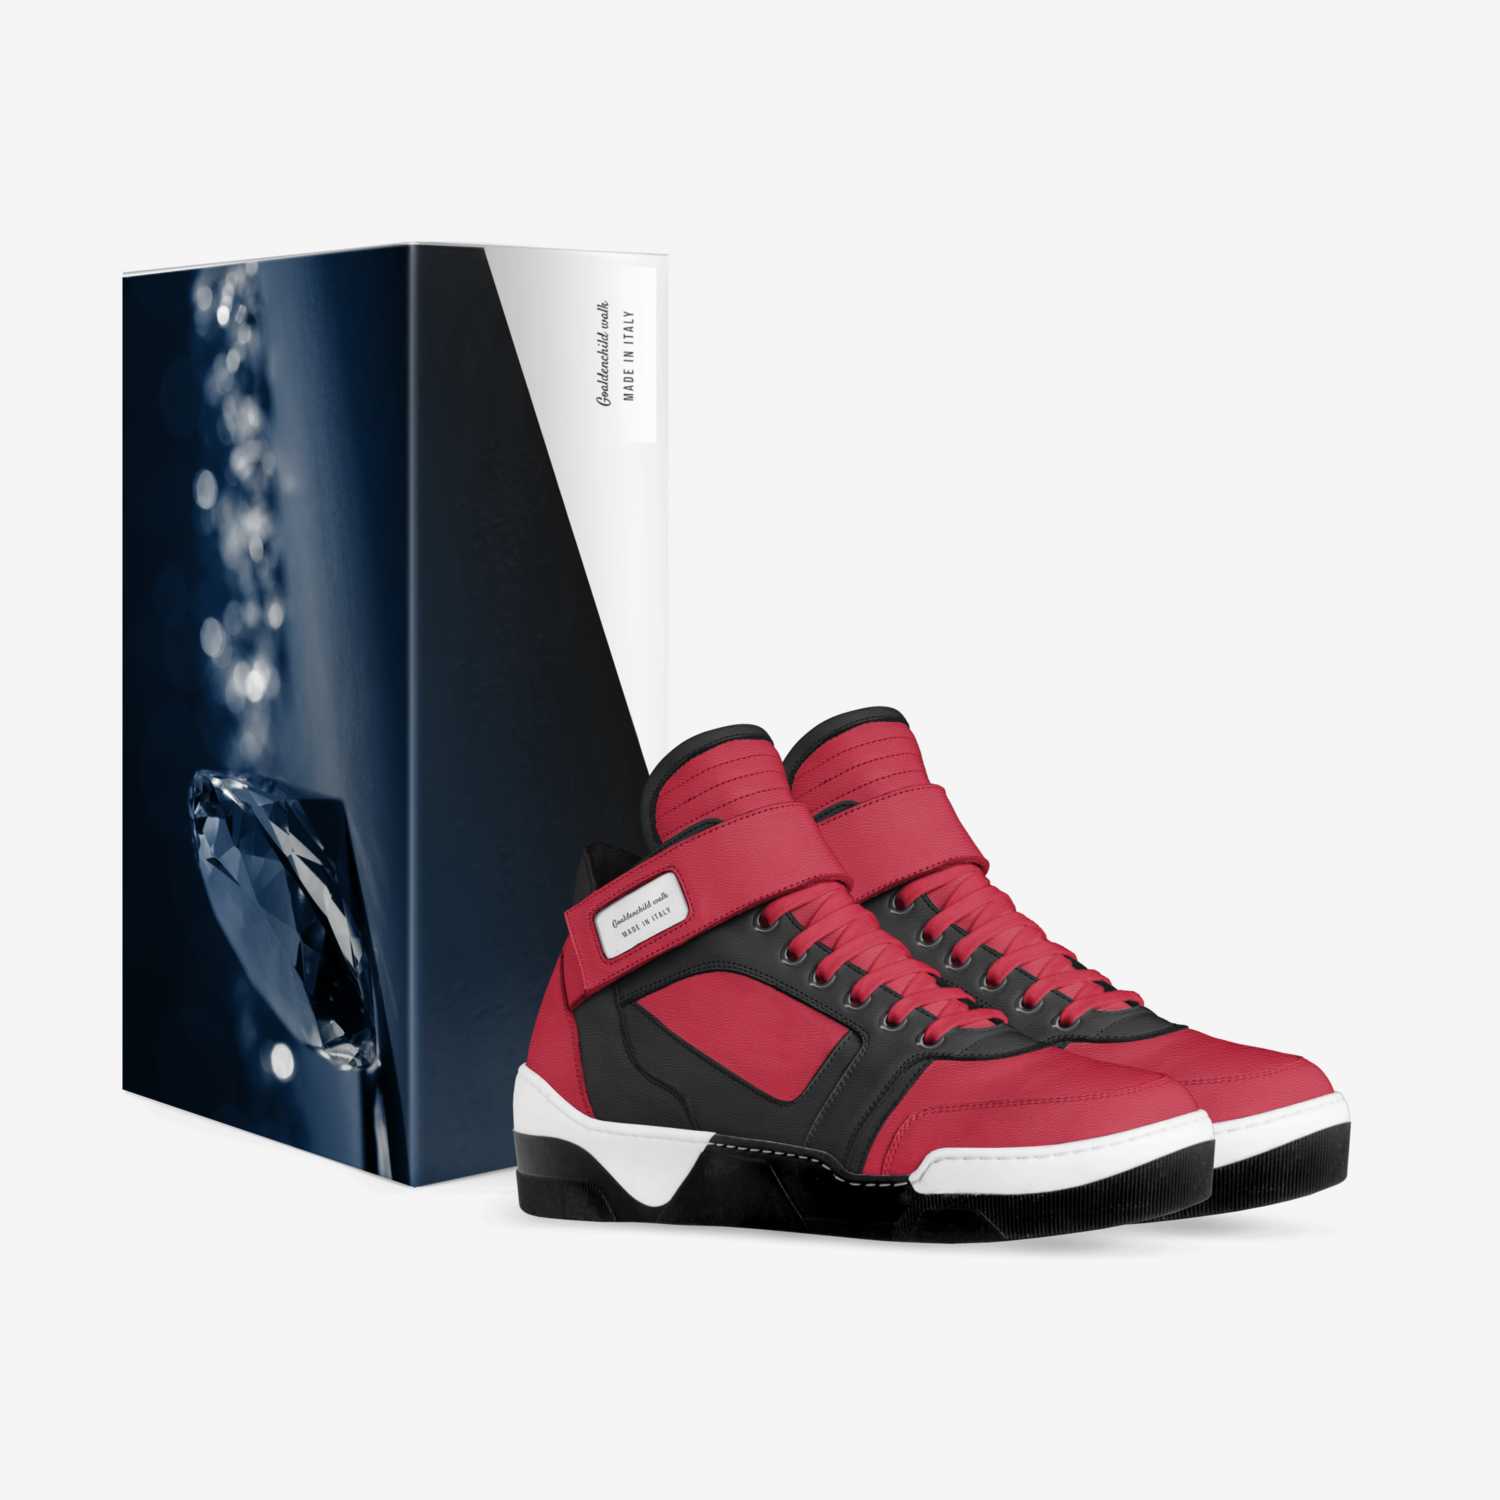 Goaldenchild walk custom made in Italy shoes by Tamara Hammond | Box view